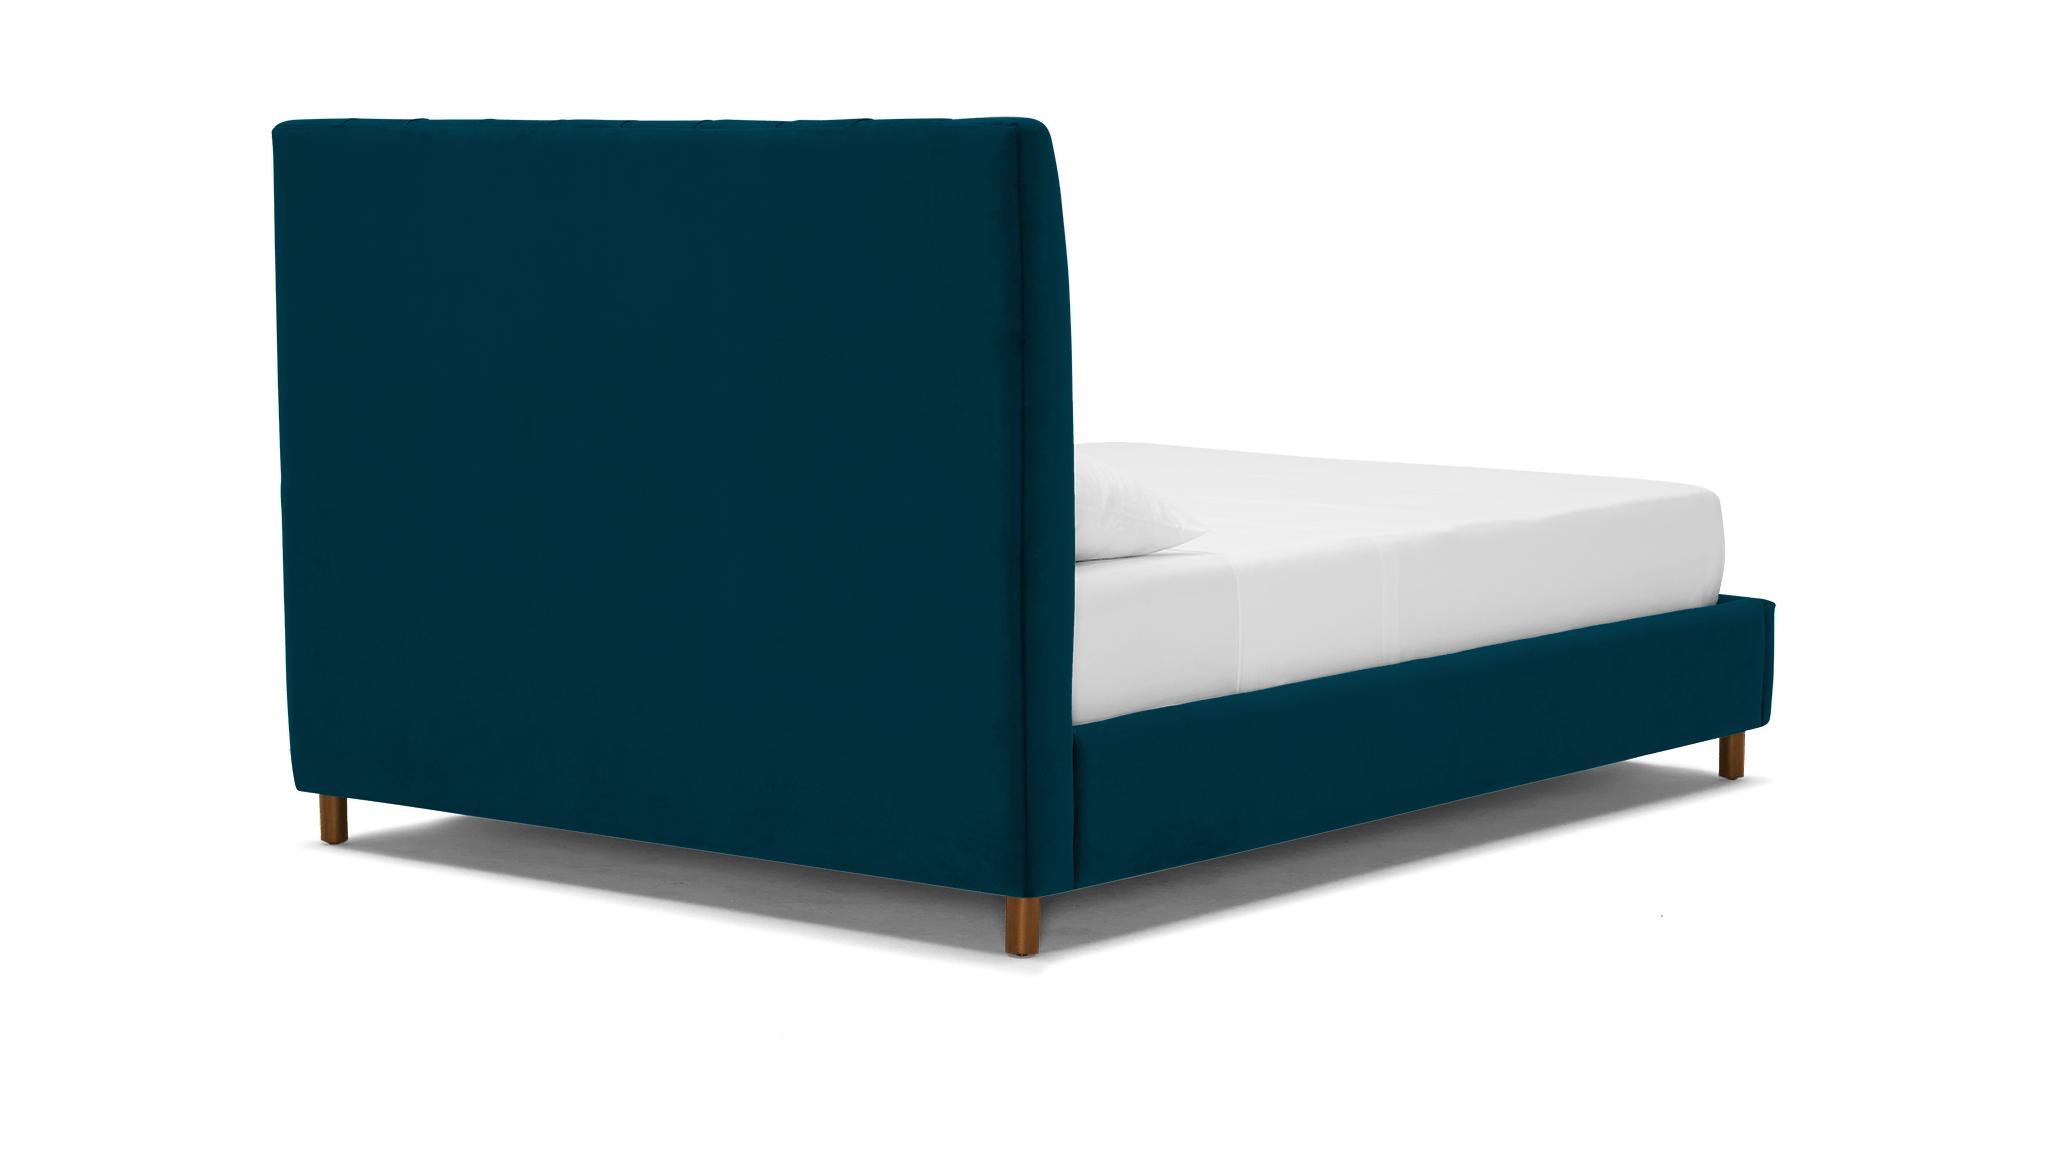 Blue Lotta Mid Century Modern Bed - Key Largo Zenith Teal - Mocha - Eastern King - Image 3